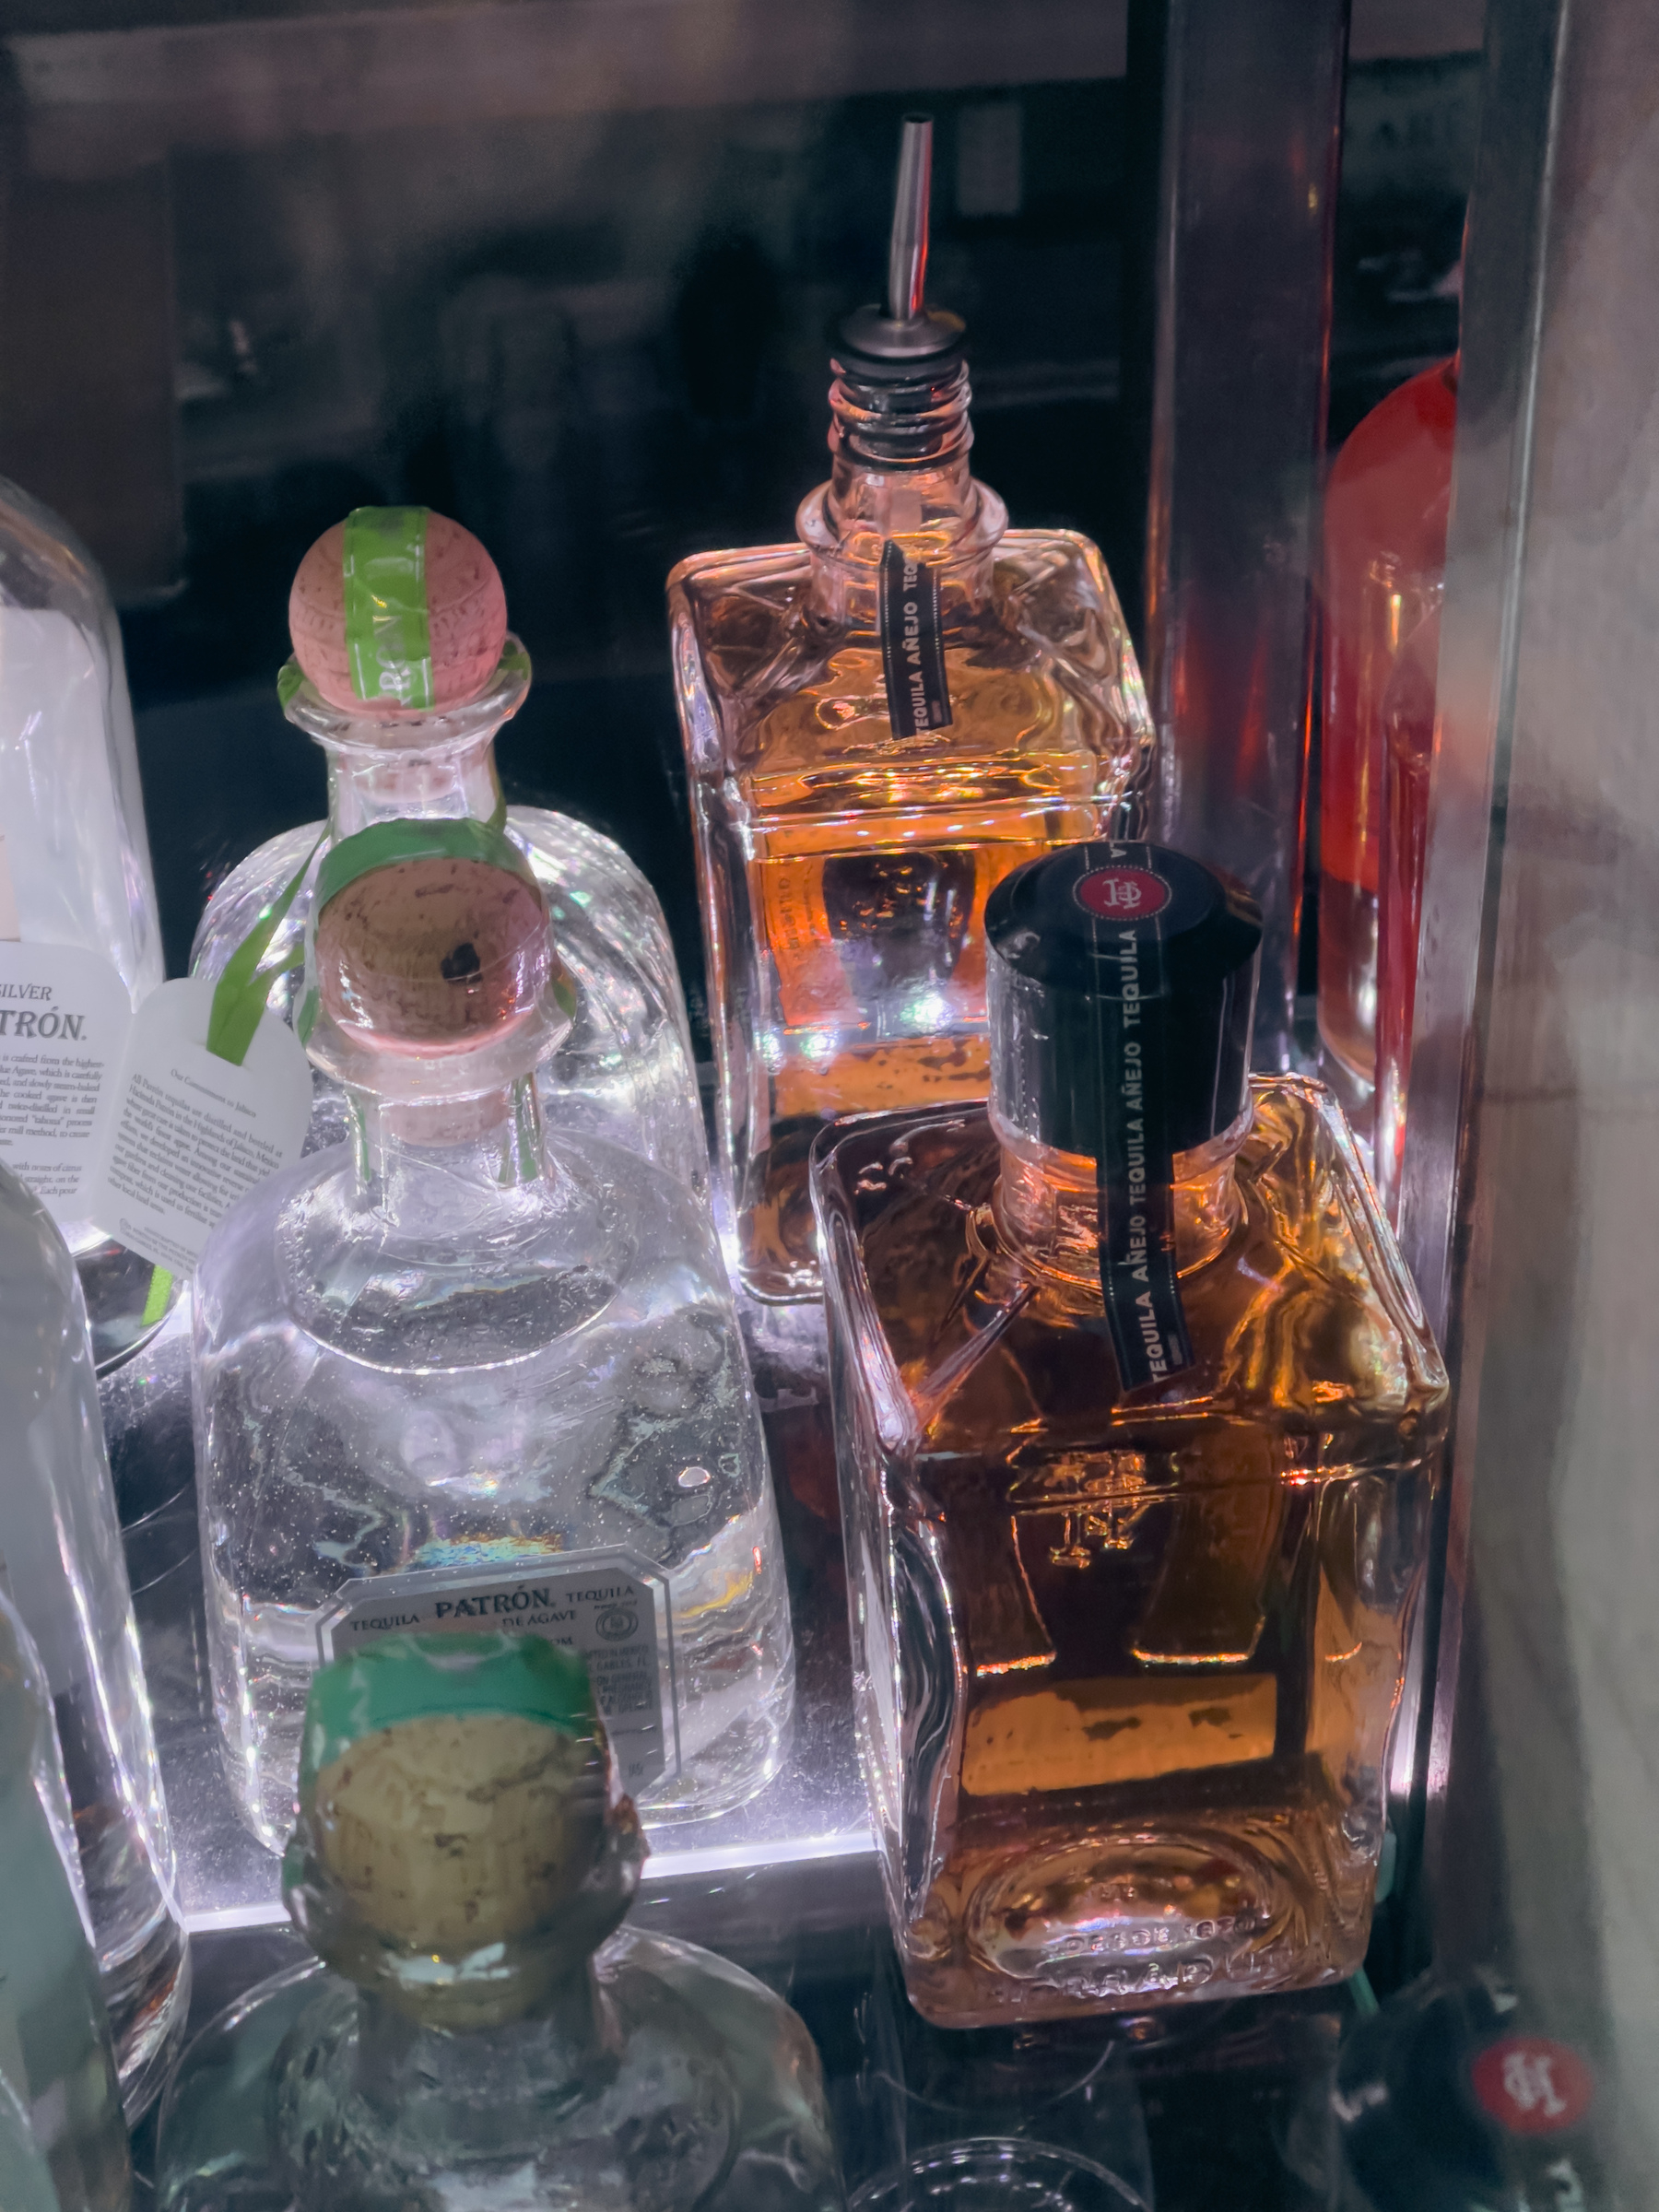 Liquor bottles in a bar window illuminated from below.